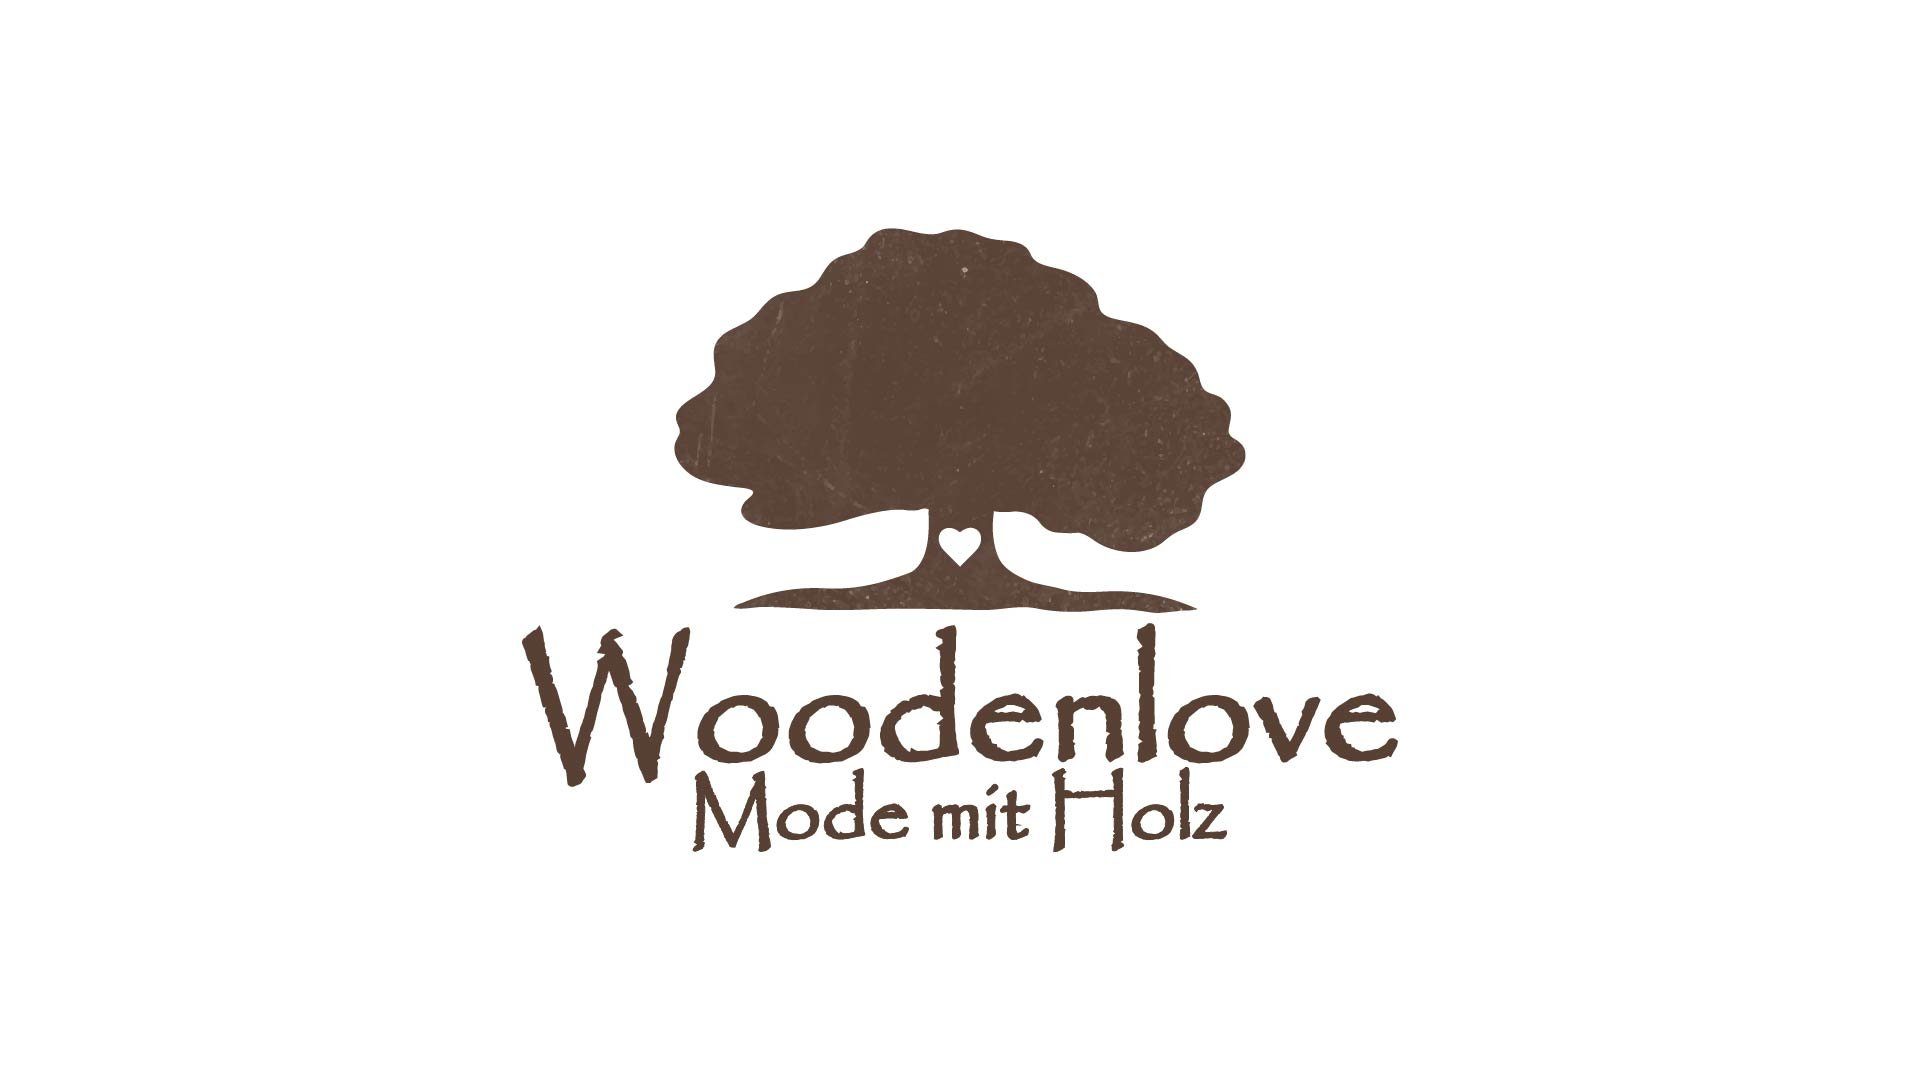 Woodenlove